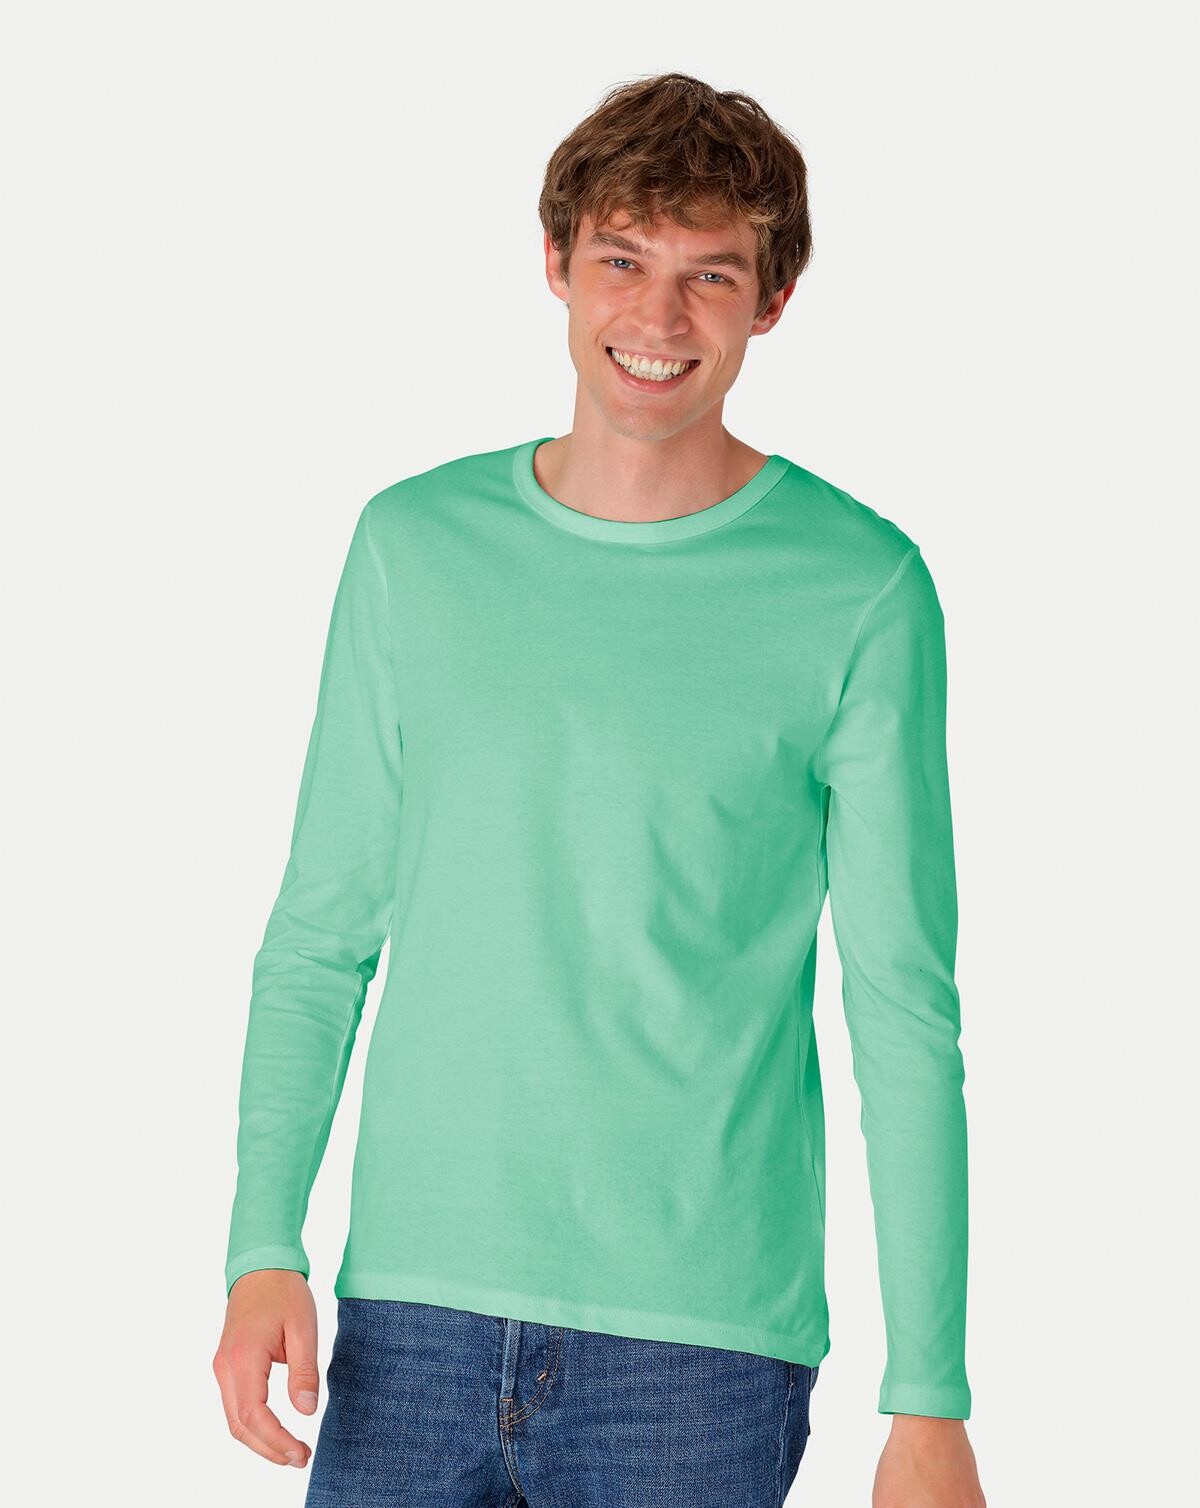 Neutral Organic - Mens Long Sleeve T-shirt (Mint, XL)